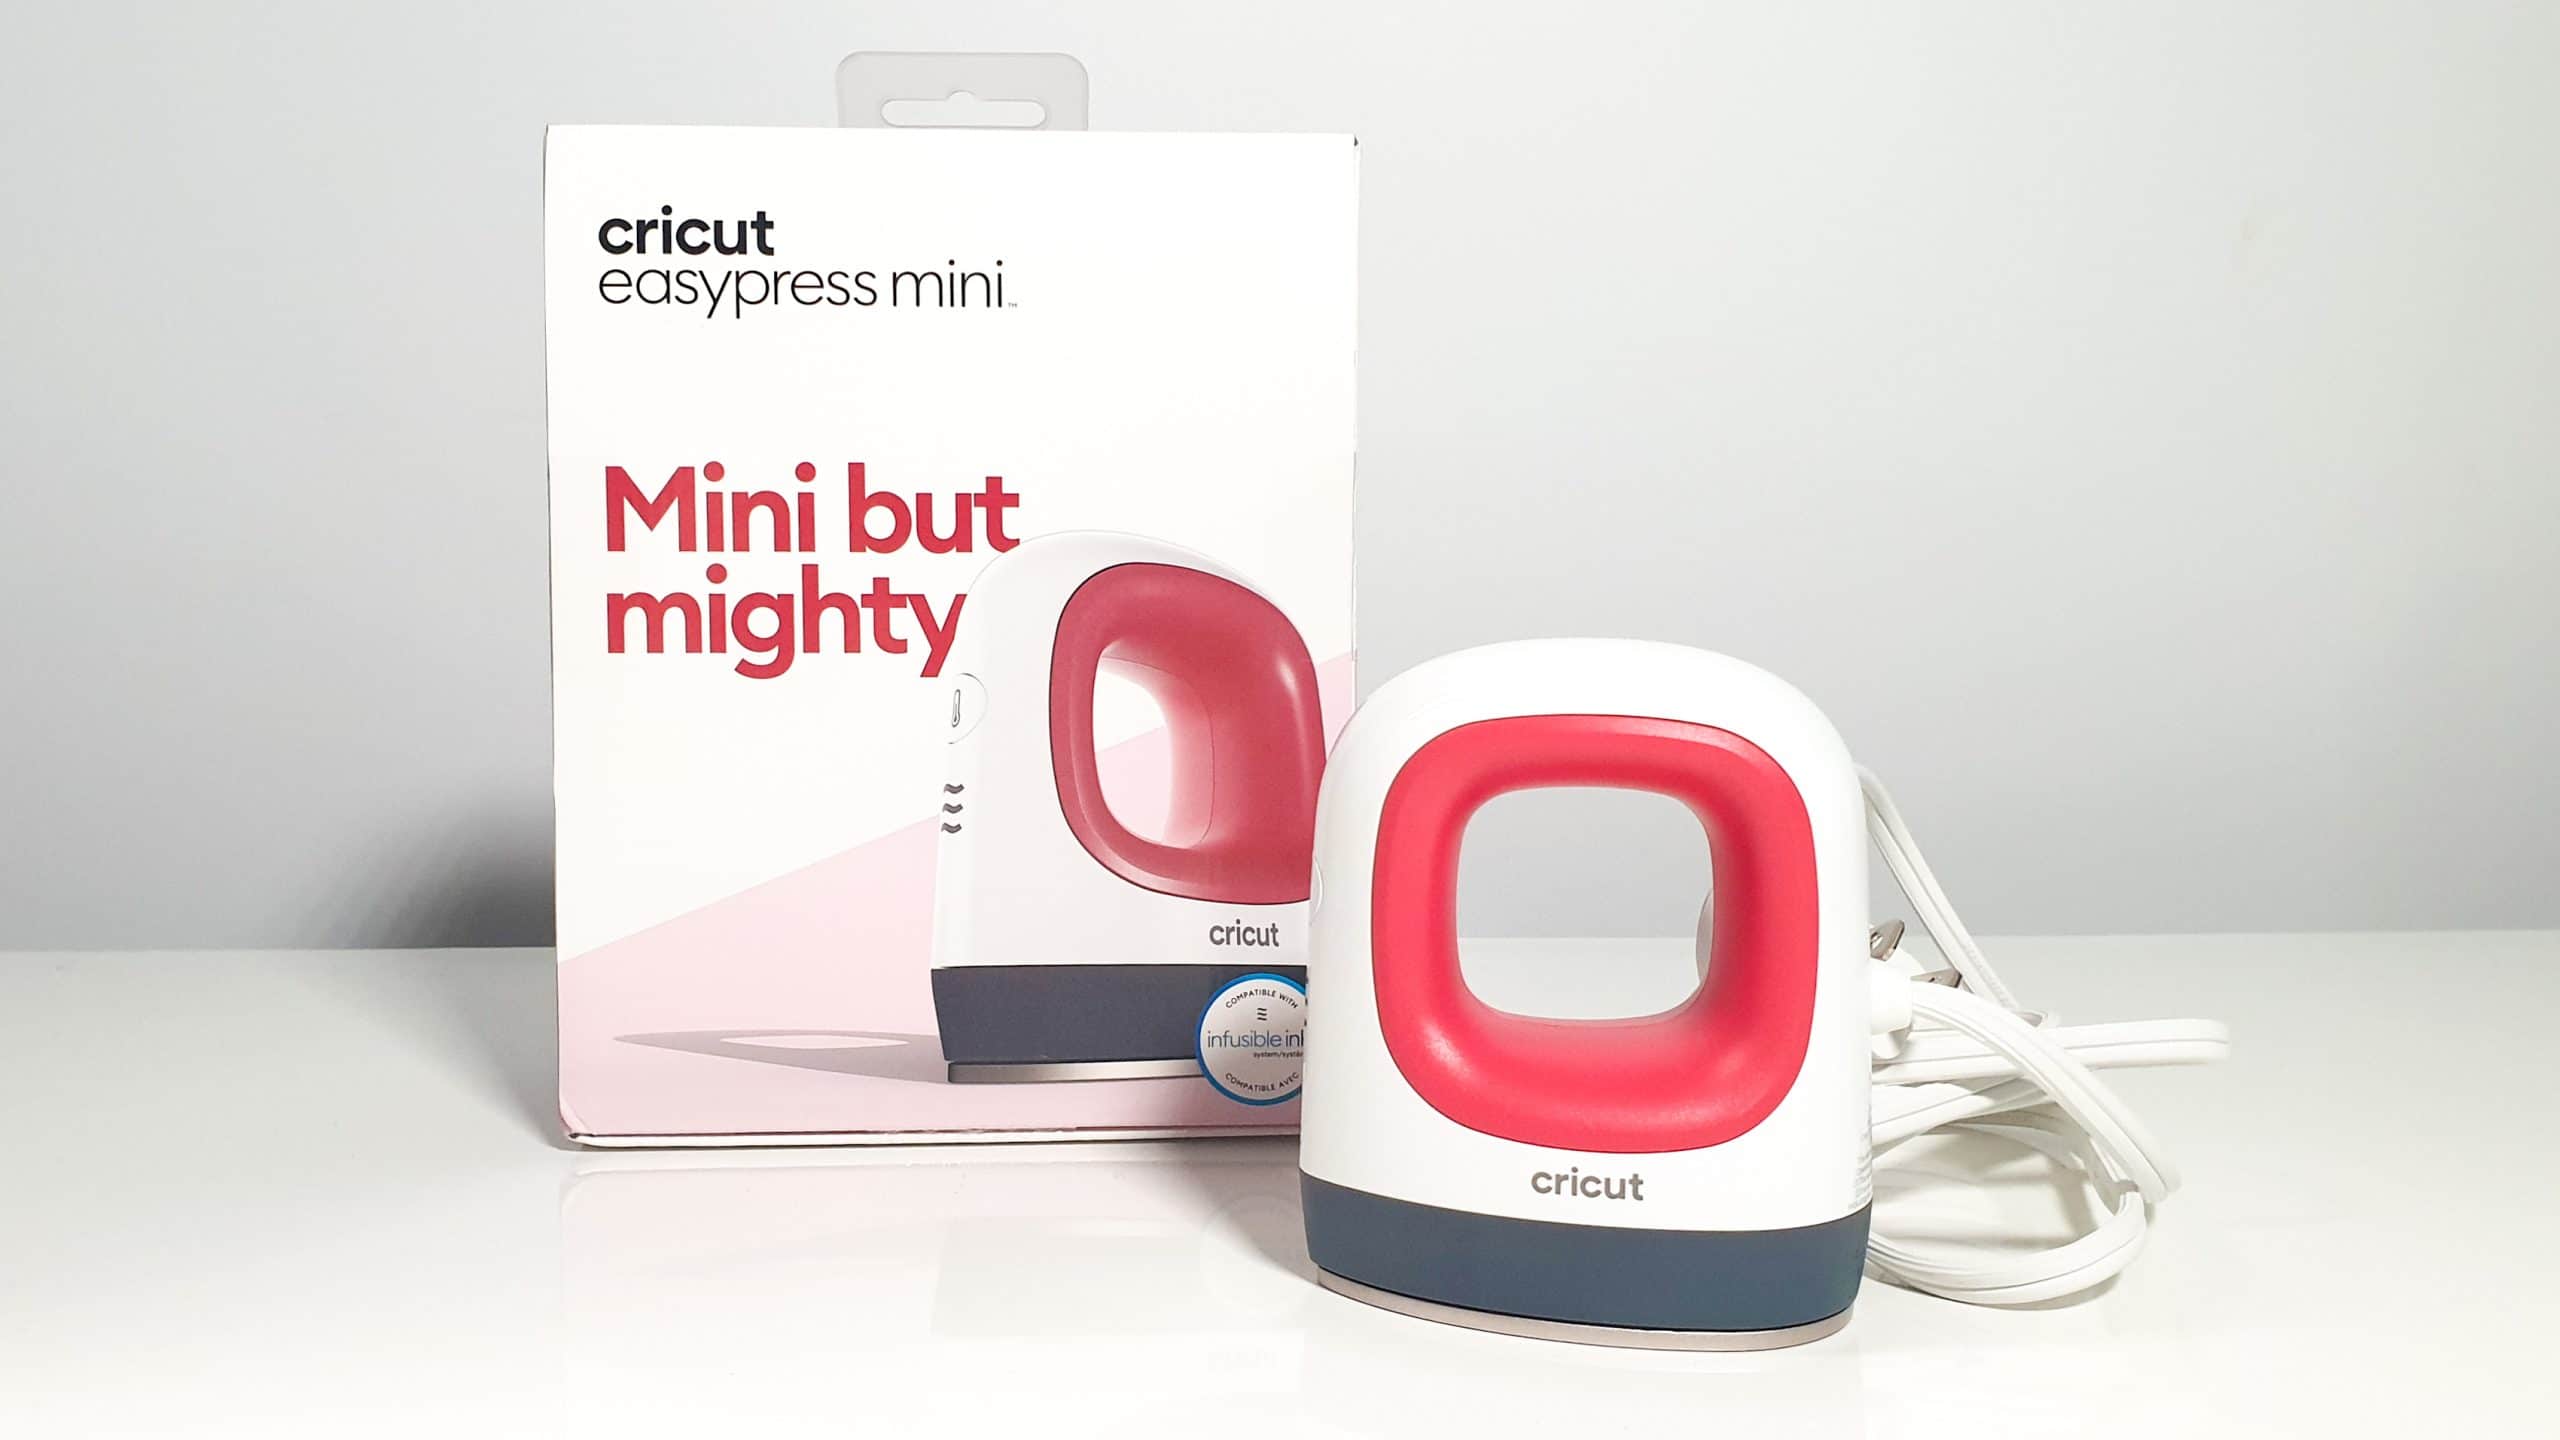 The New Cricut EasyPress MINI Is It Better Than An Iron?